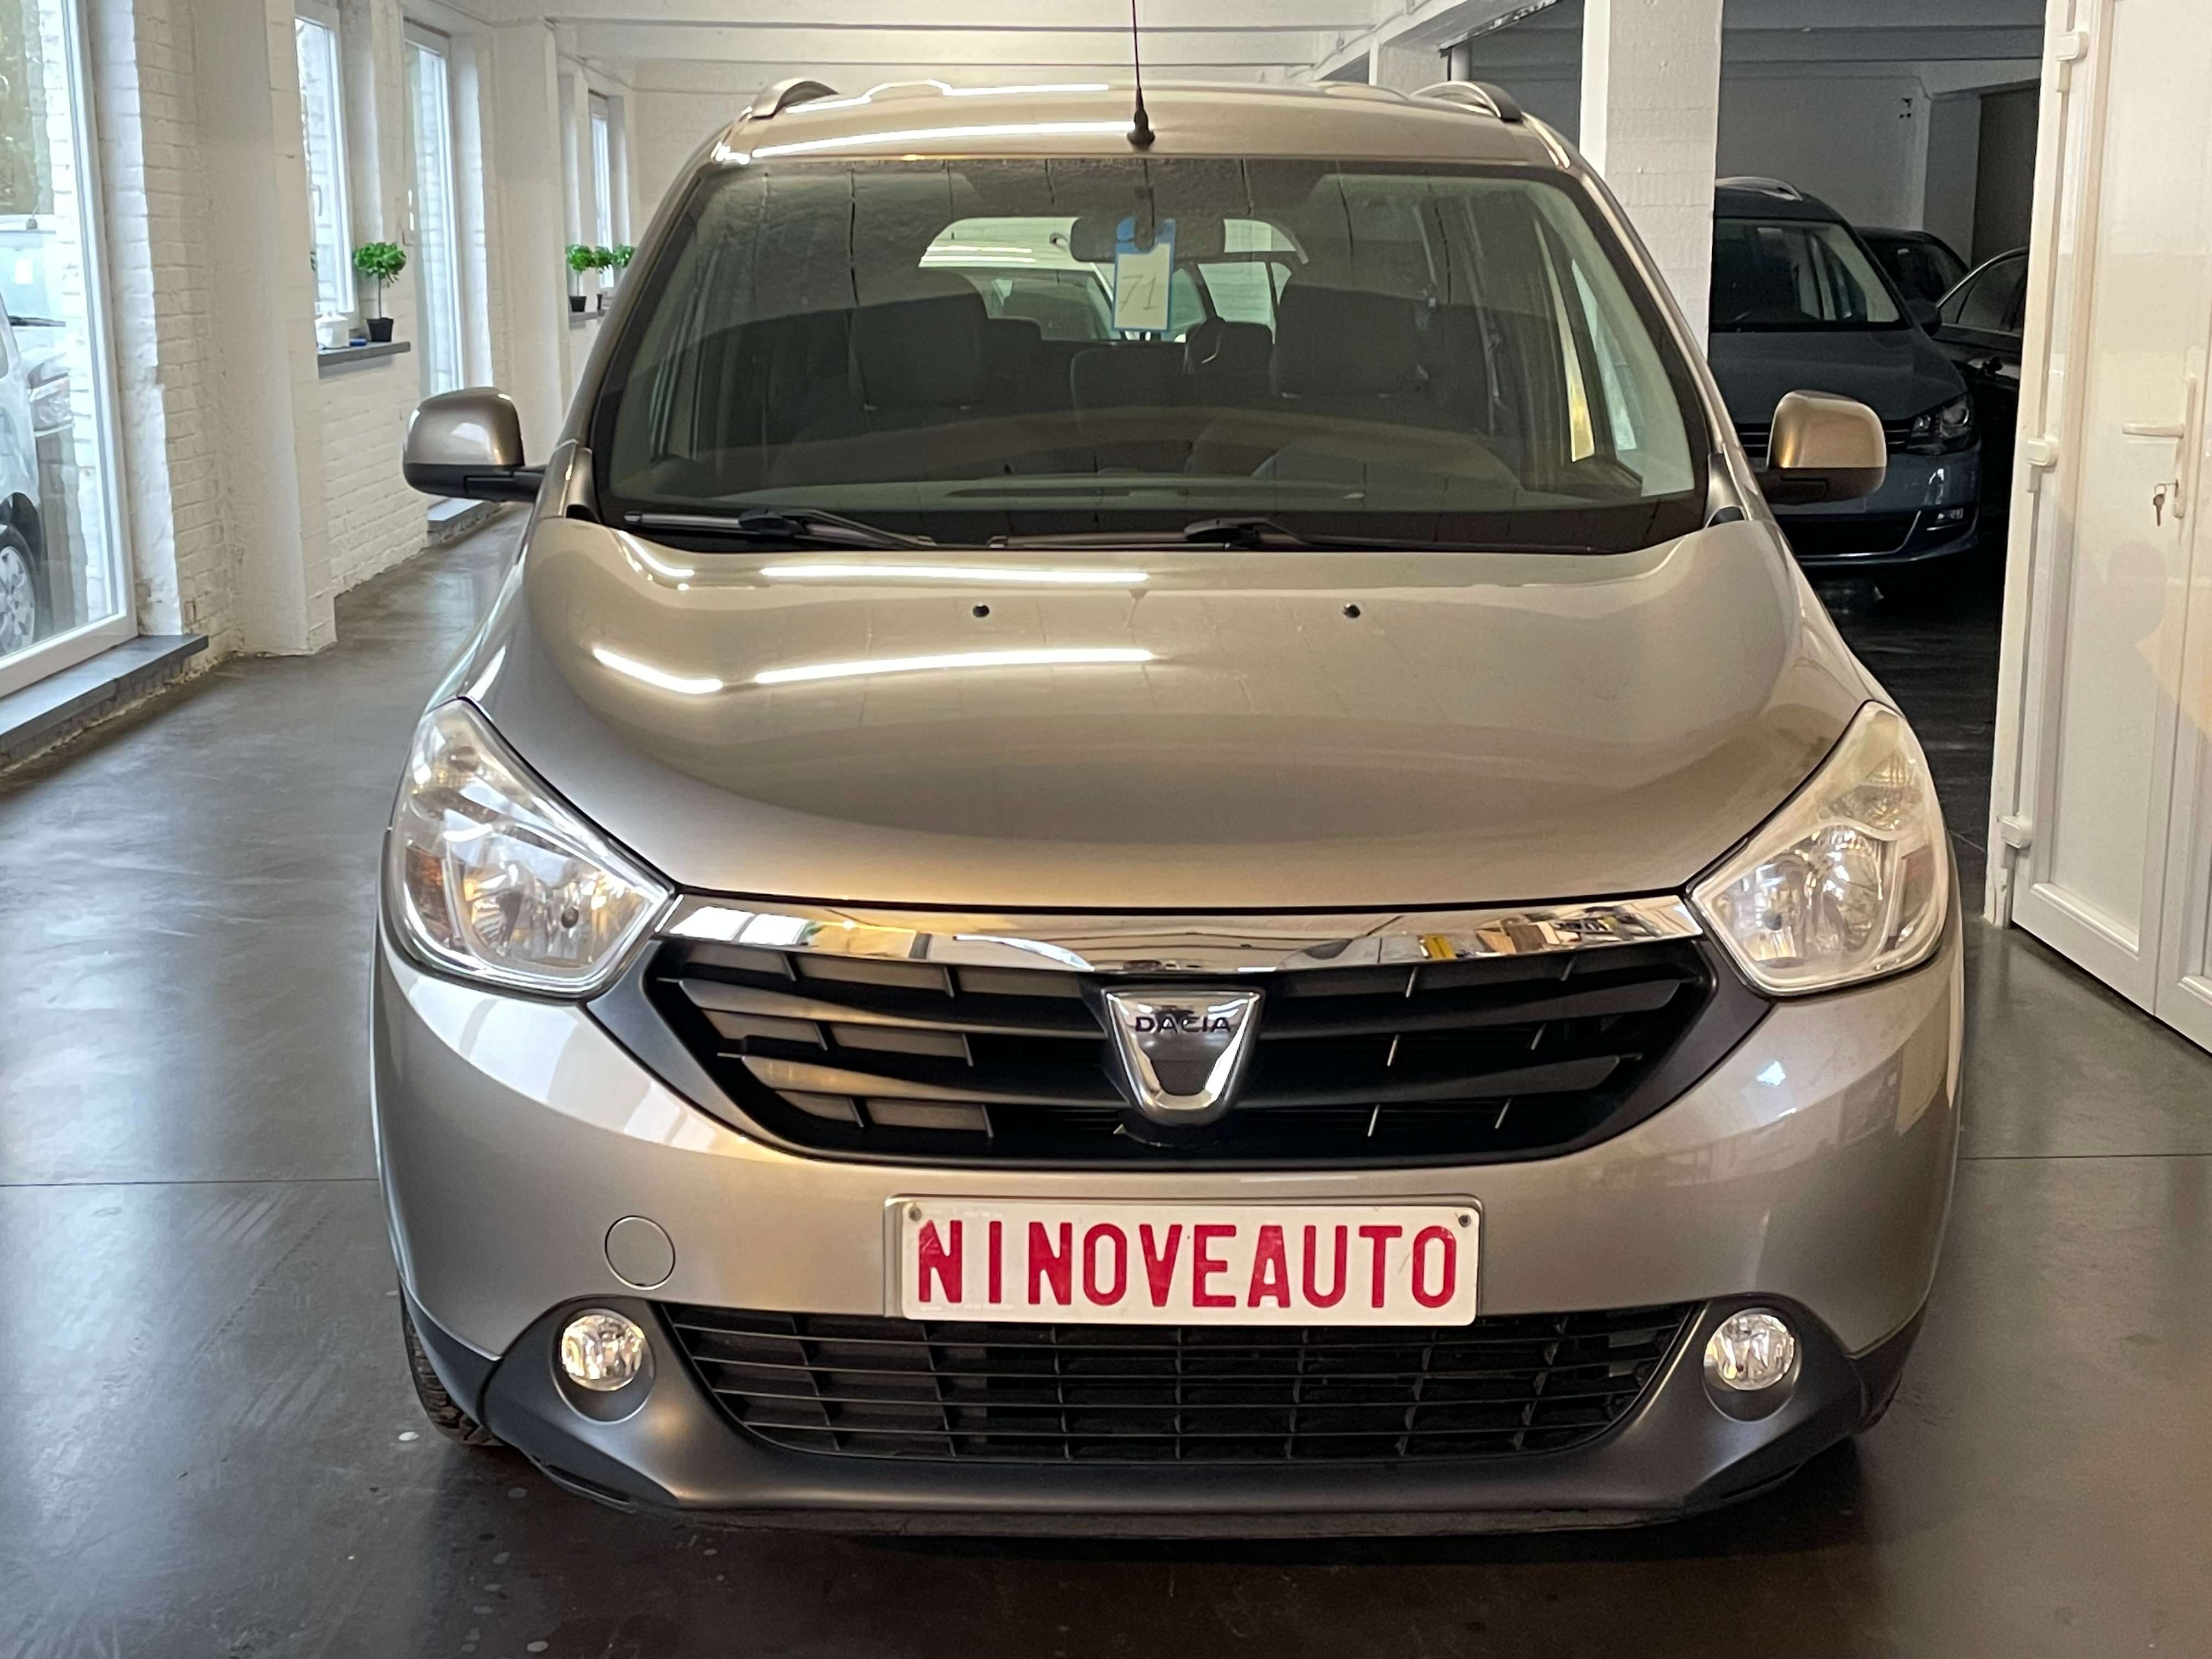 Ninove auto - Dacia Lodgy